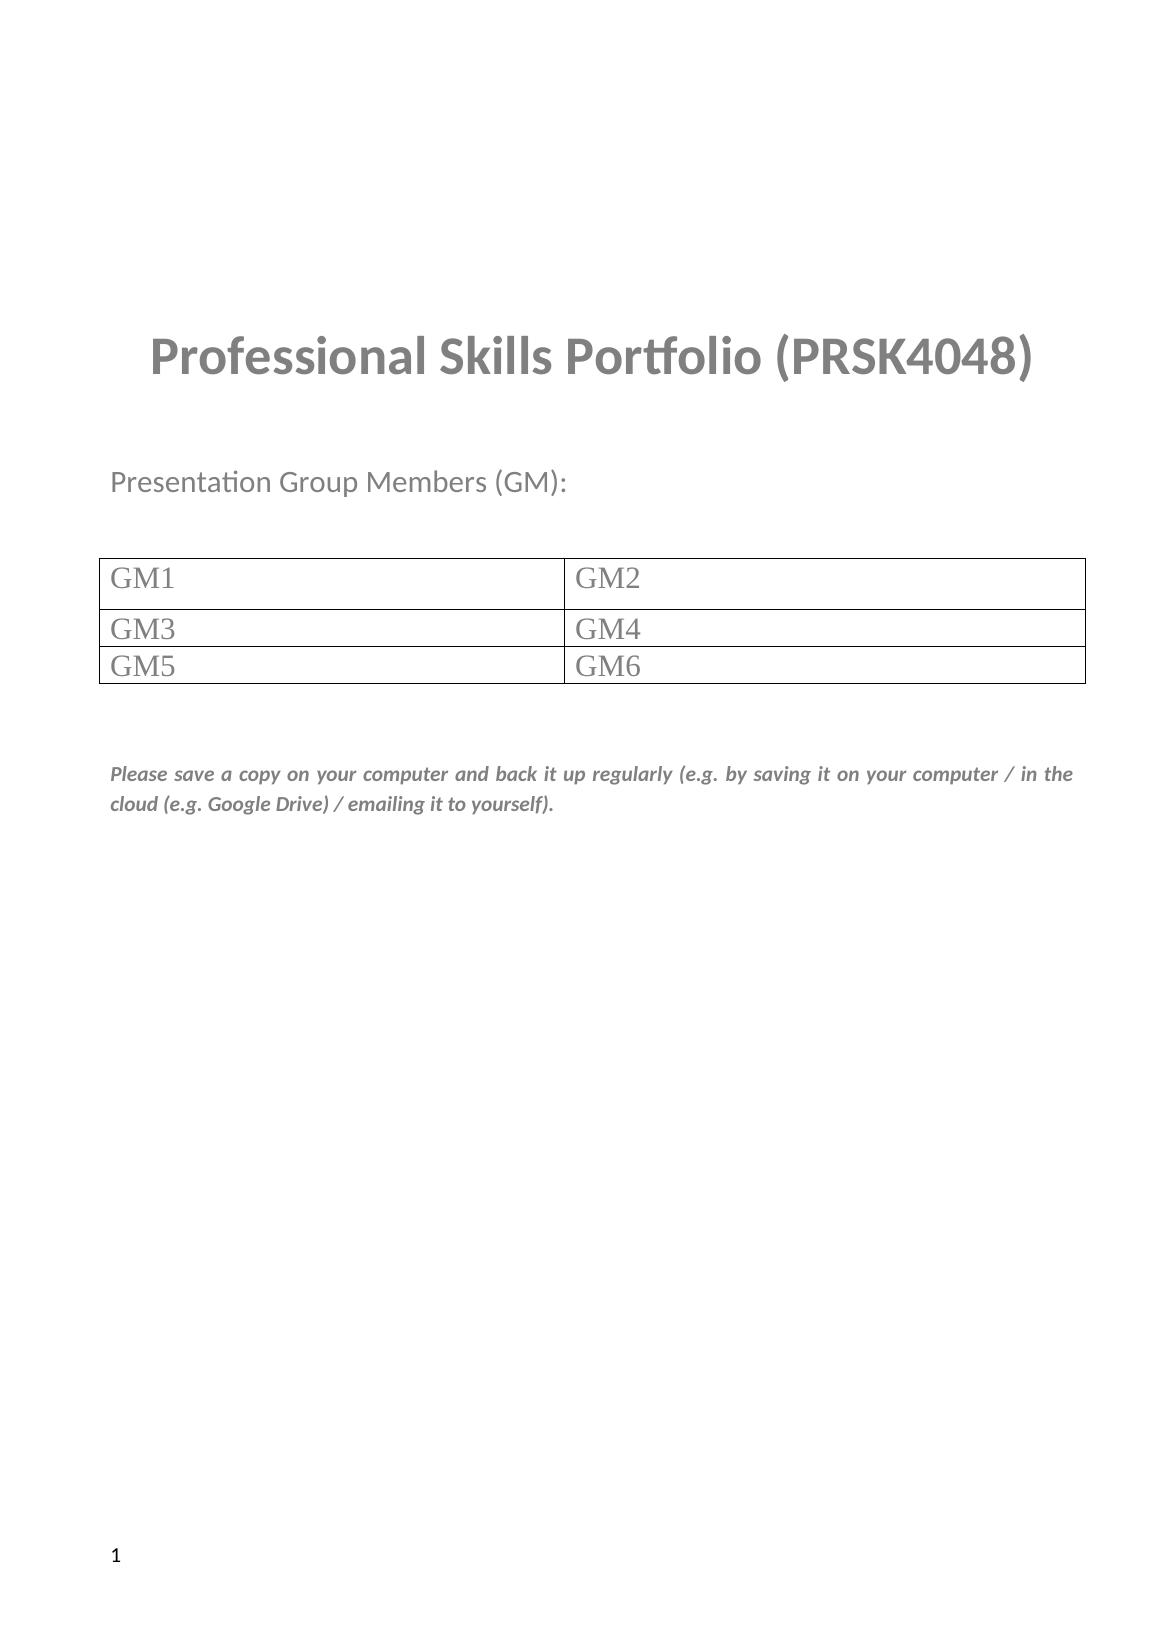 Professional Skills Portfolio  (PRSK4048)_1